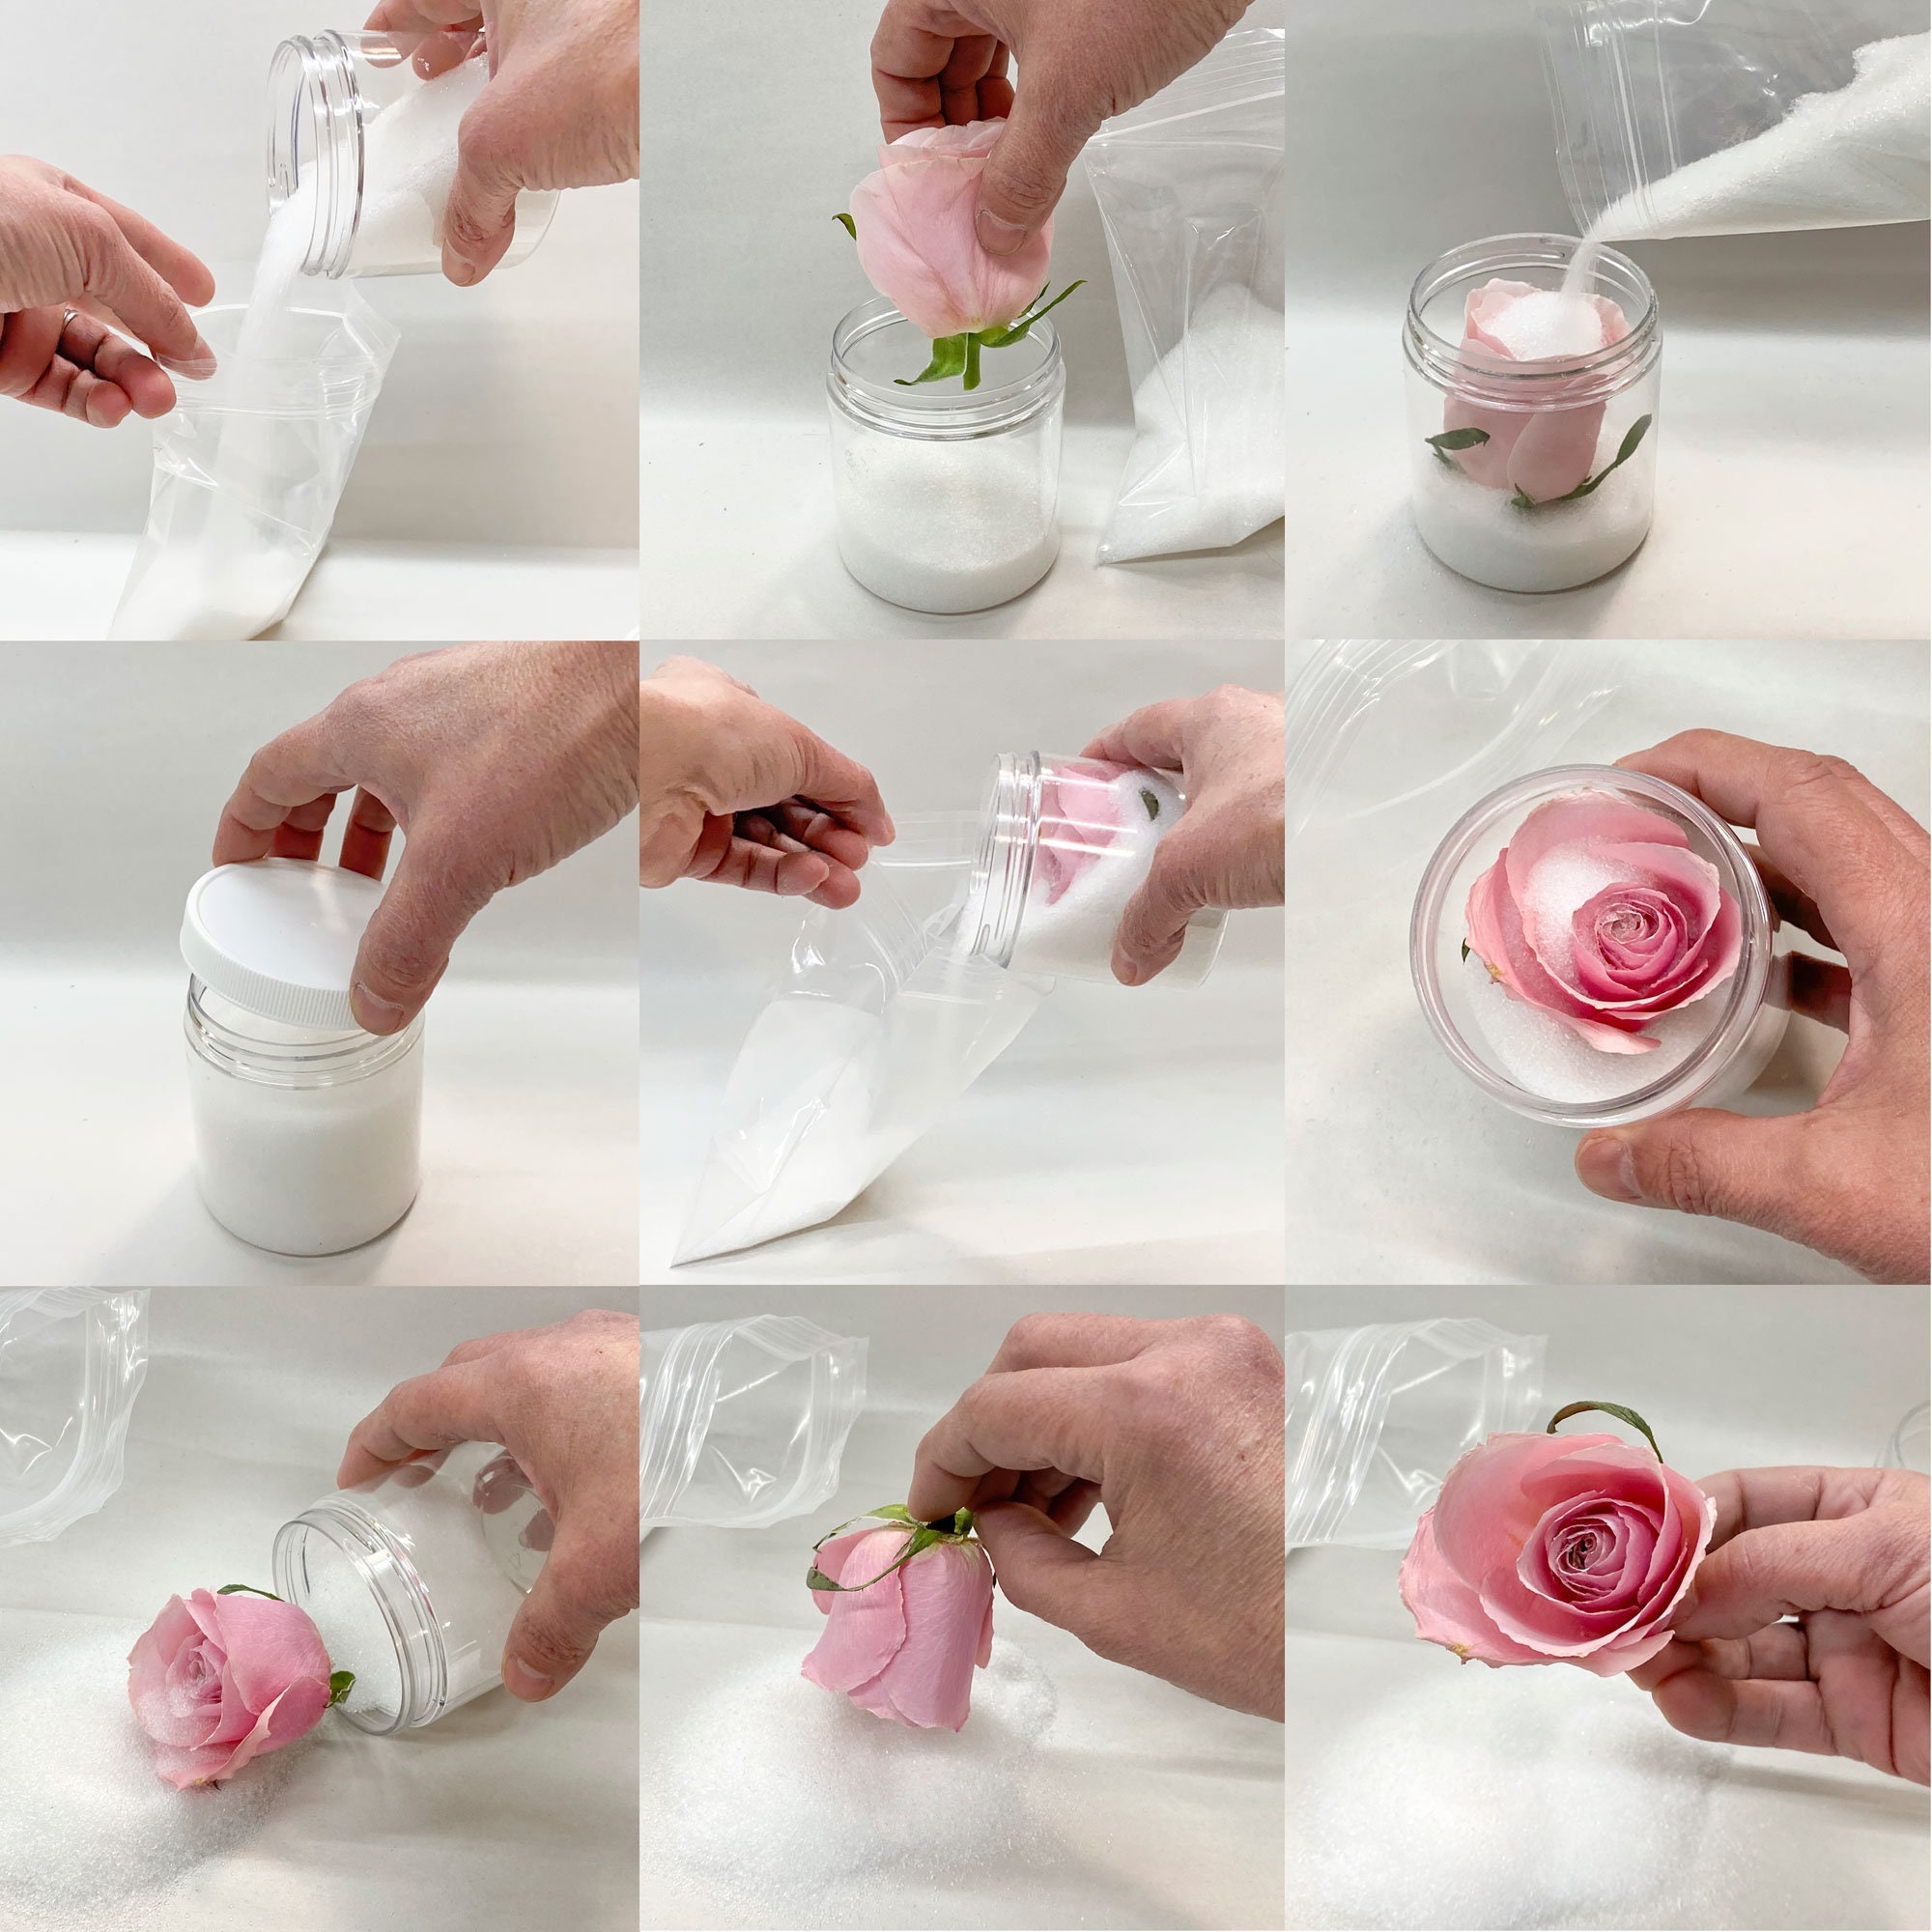 1 Single Flower Drying Kit ONE JAR Includes Silica Gel Powder and Storage  Jar Reusable 